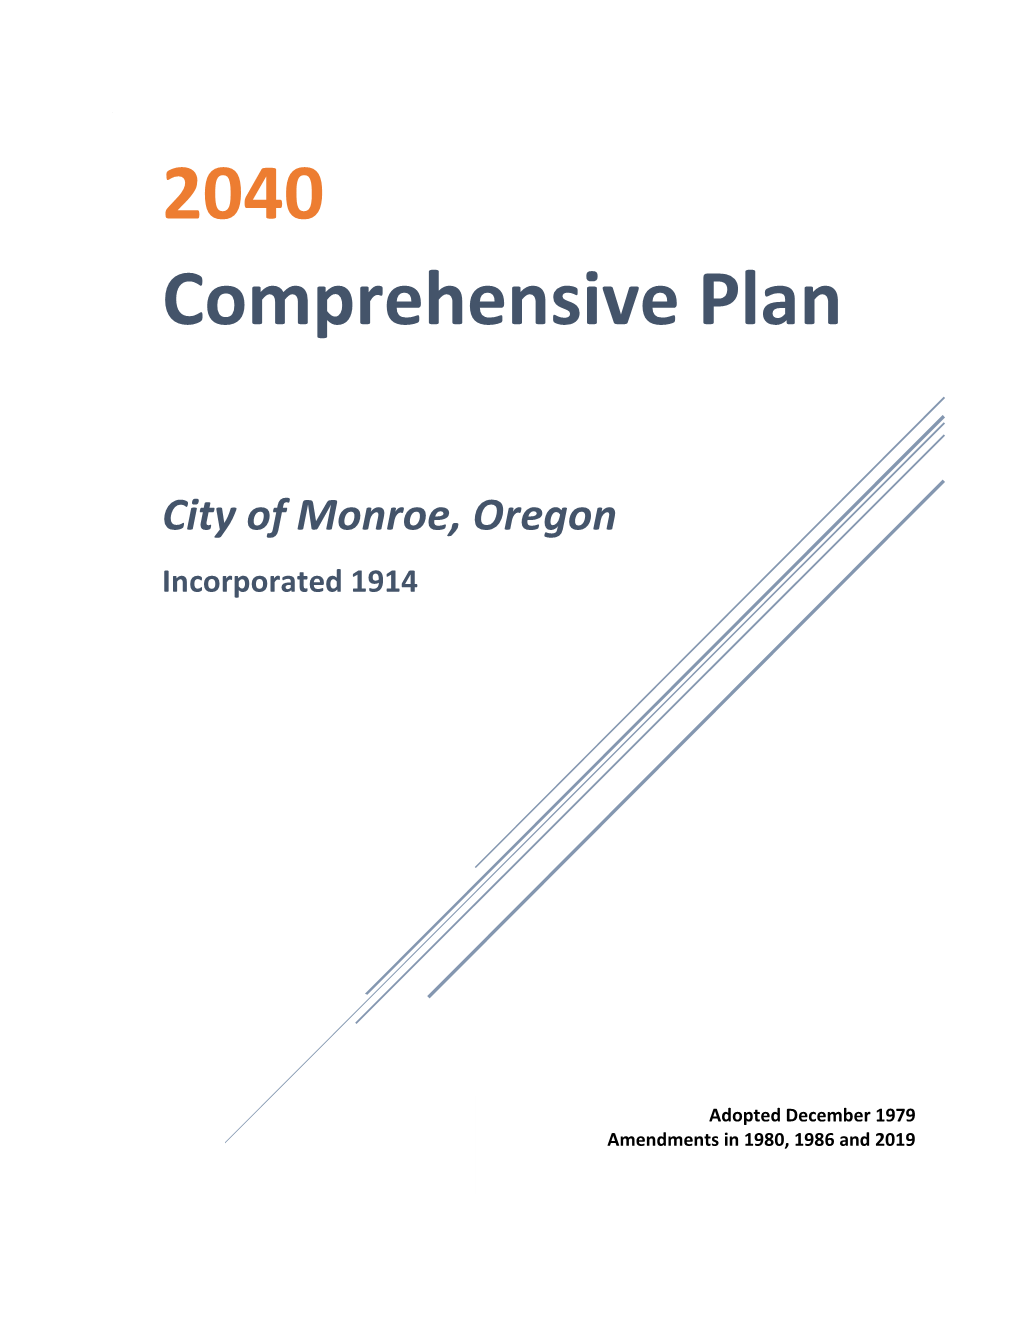 City of Monroe 2038 Comprehensive Plan